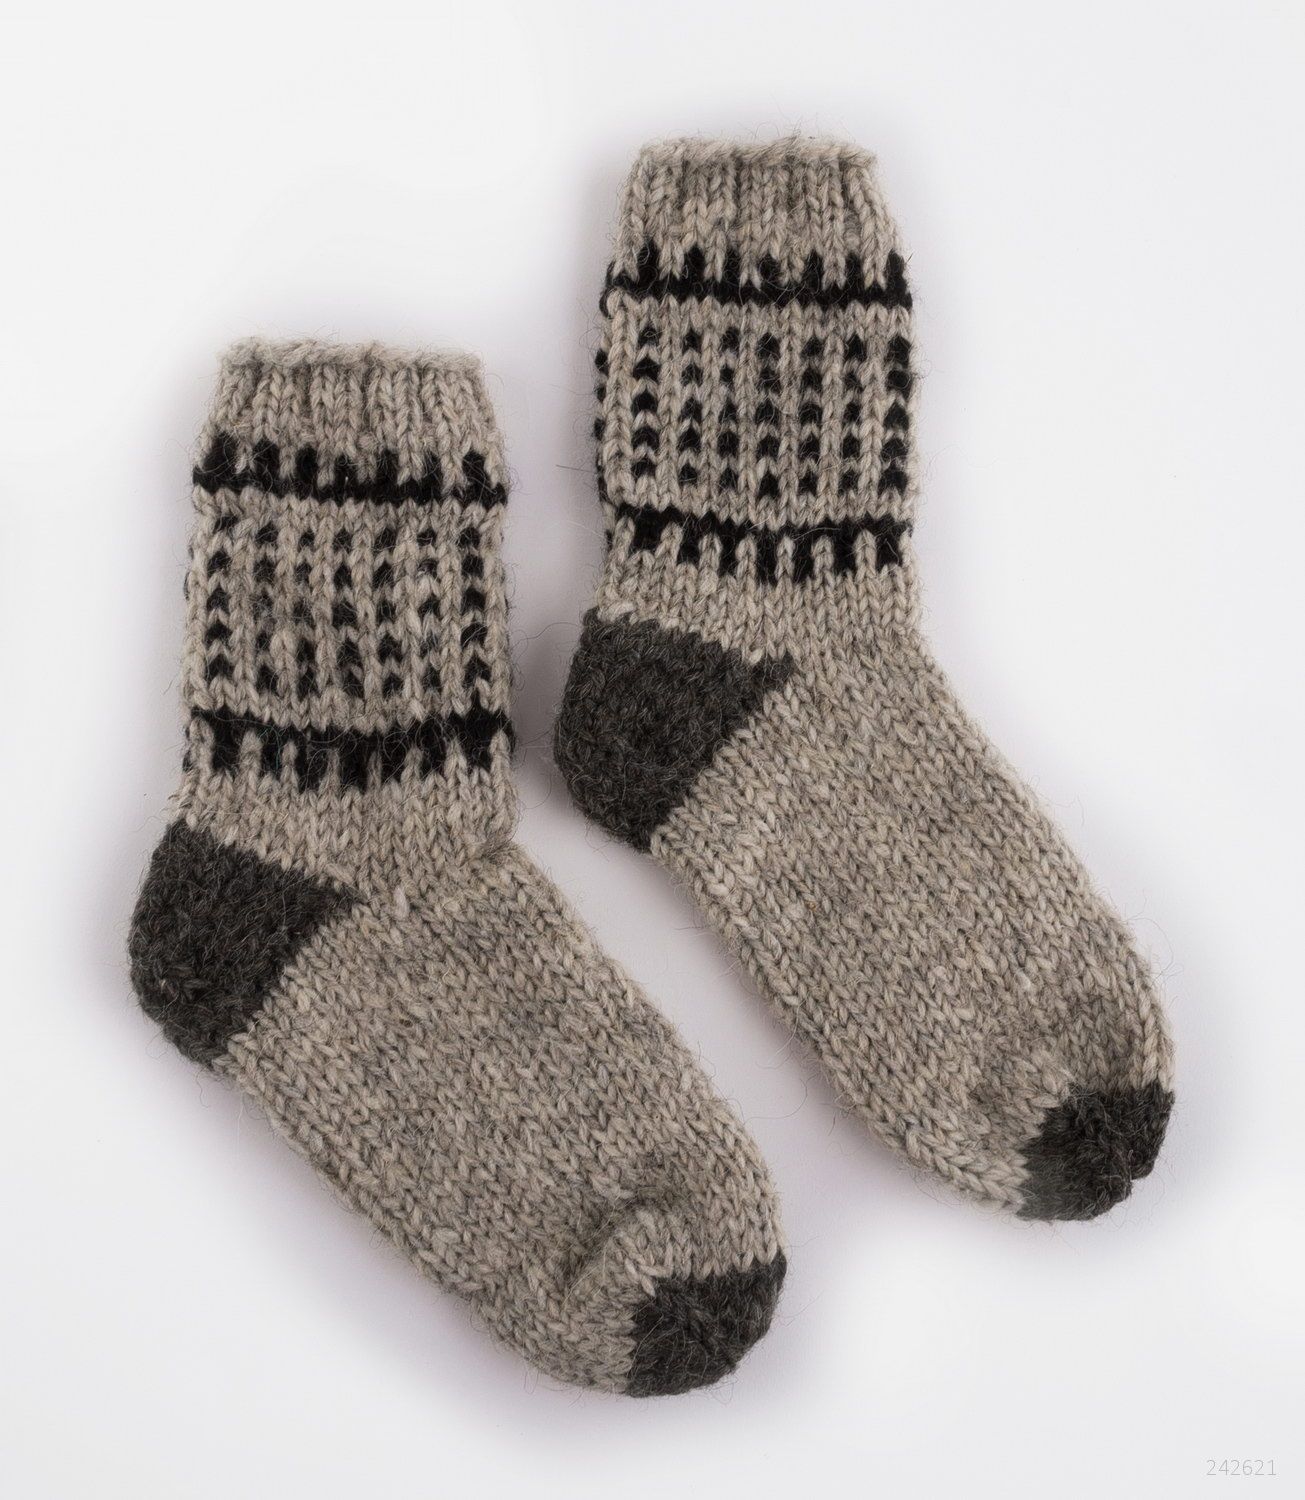 BUY Men's woolen socks 242621 - HANDMADE GOODS at MADEHEART.COM